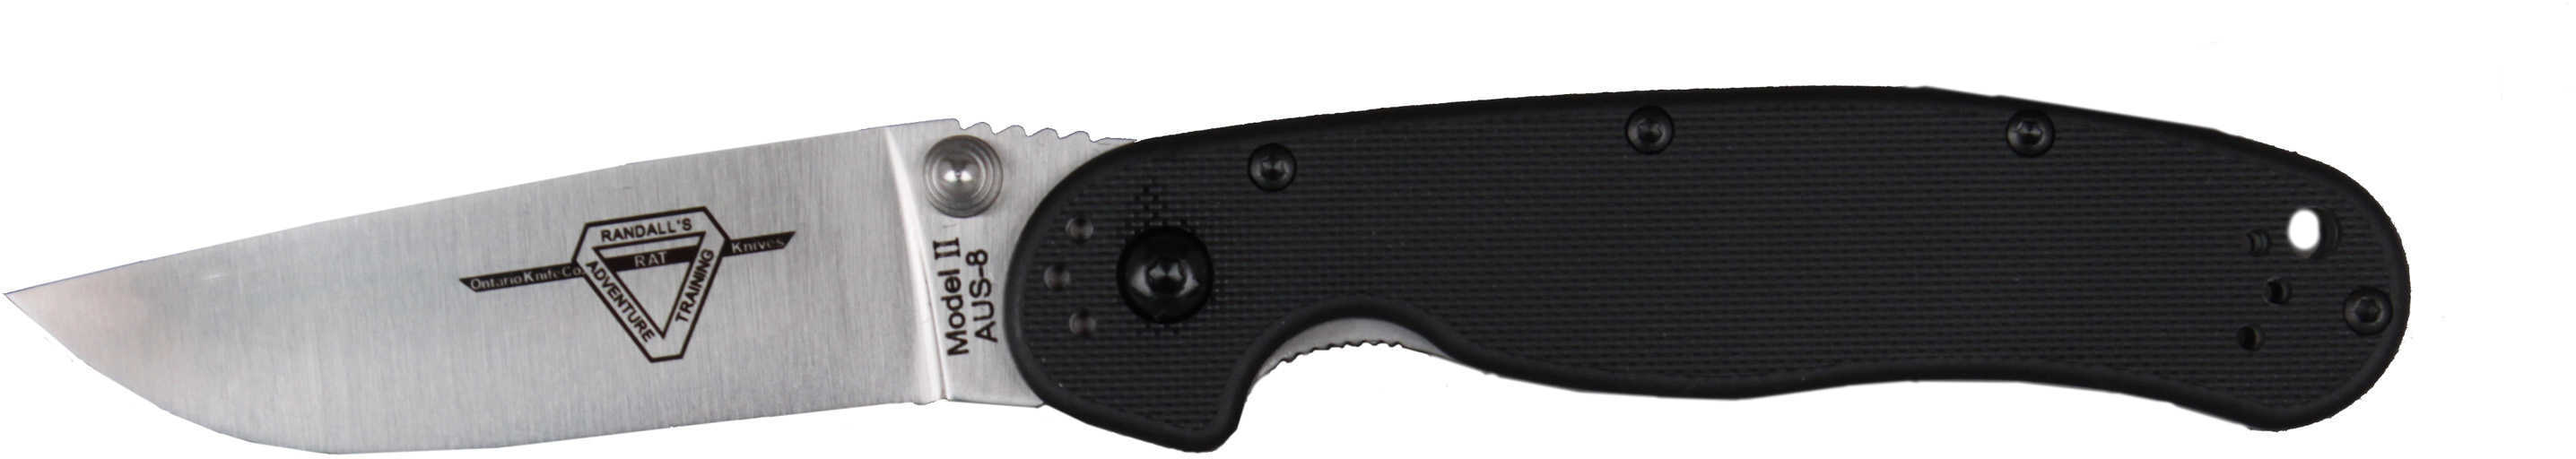 Ontario Knife Company RAT Model II Folder SP, Black Handle 8860